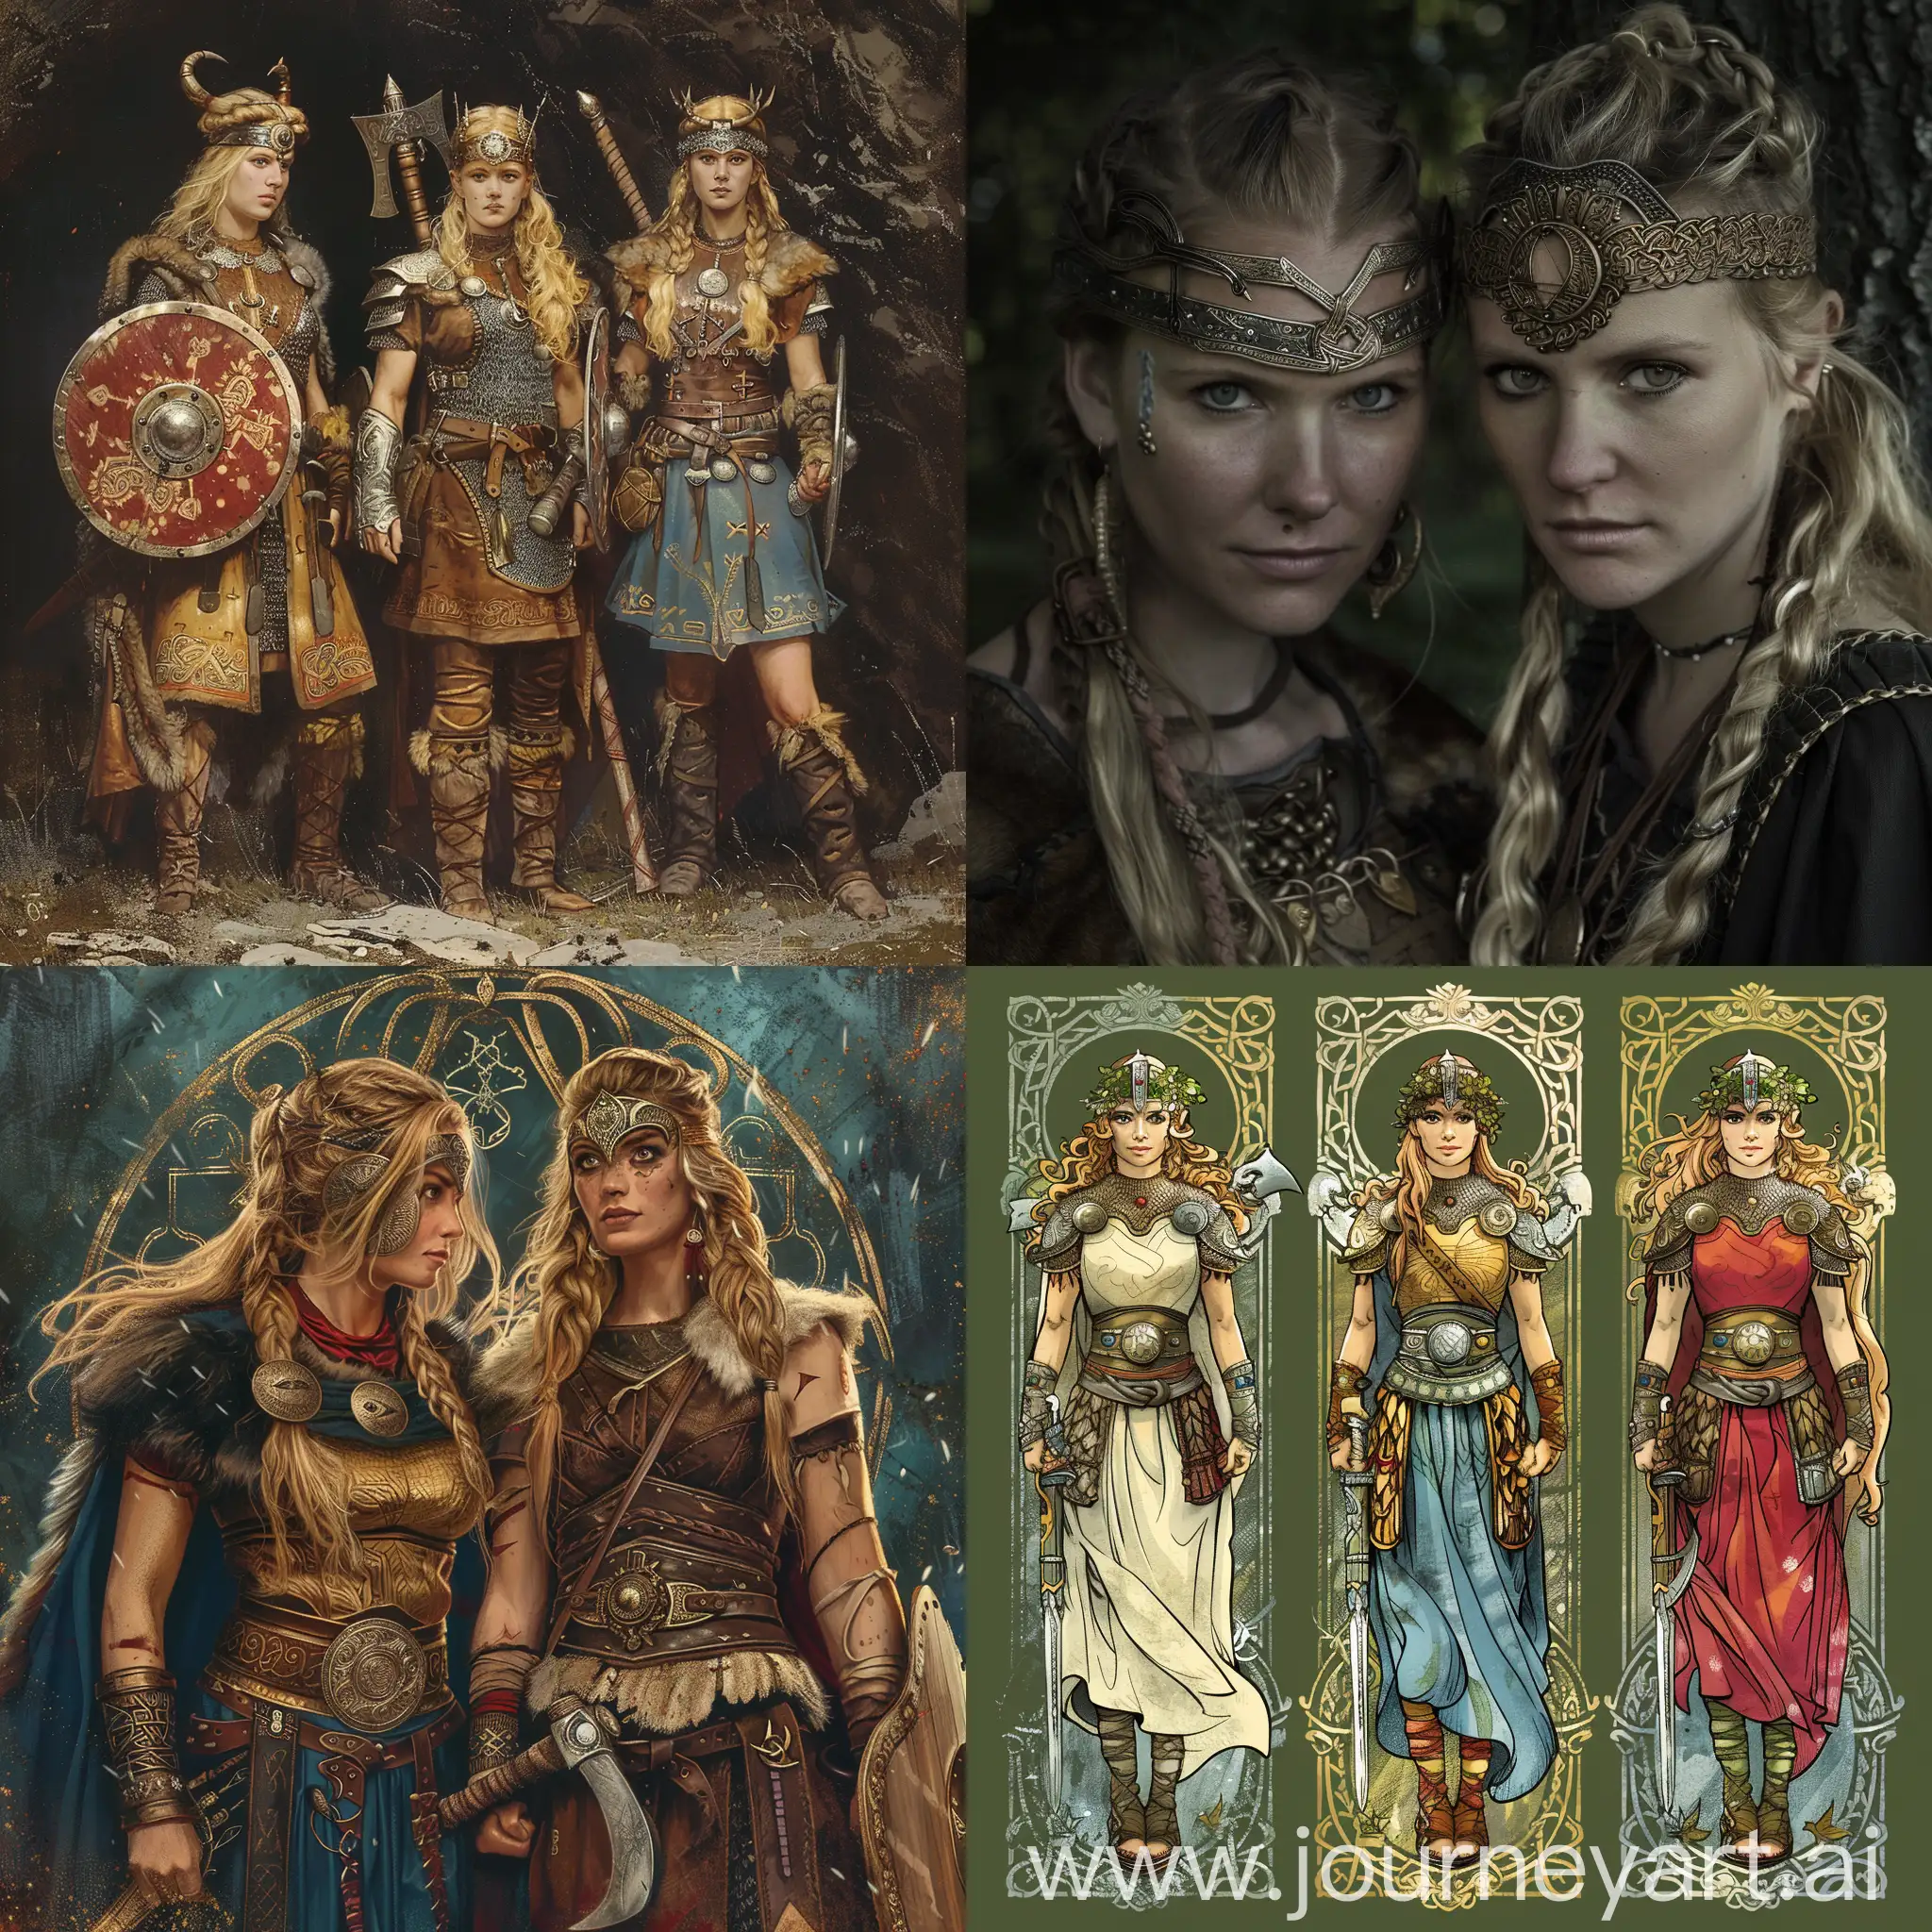 Majestic-Viking-Goddesses-in-Square-Aspect-Ratio-Art